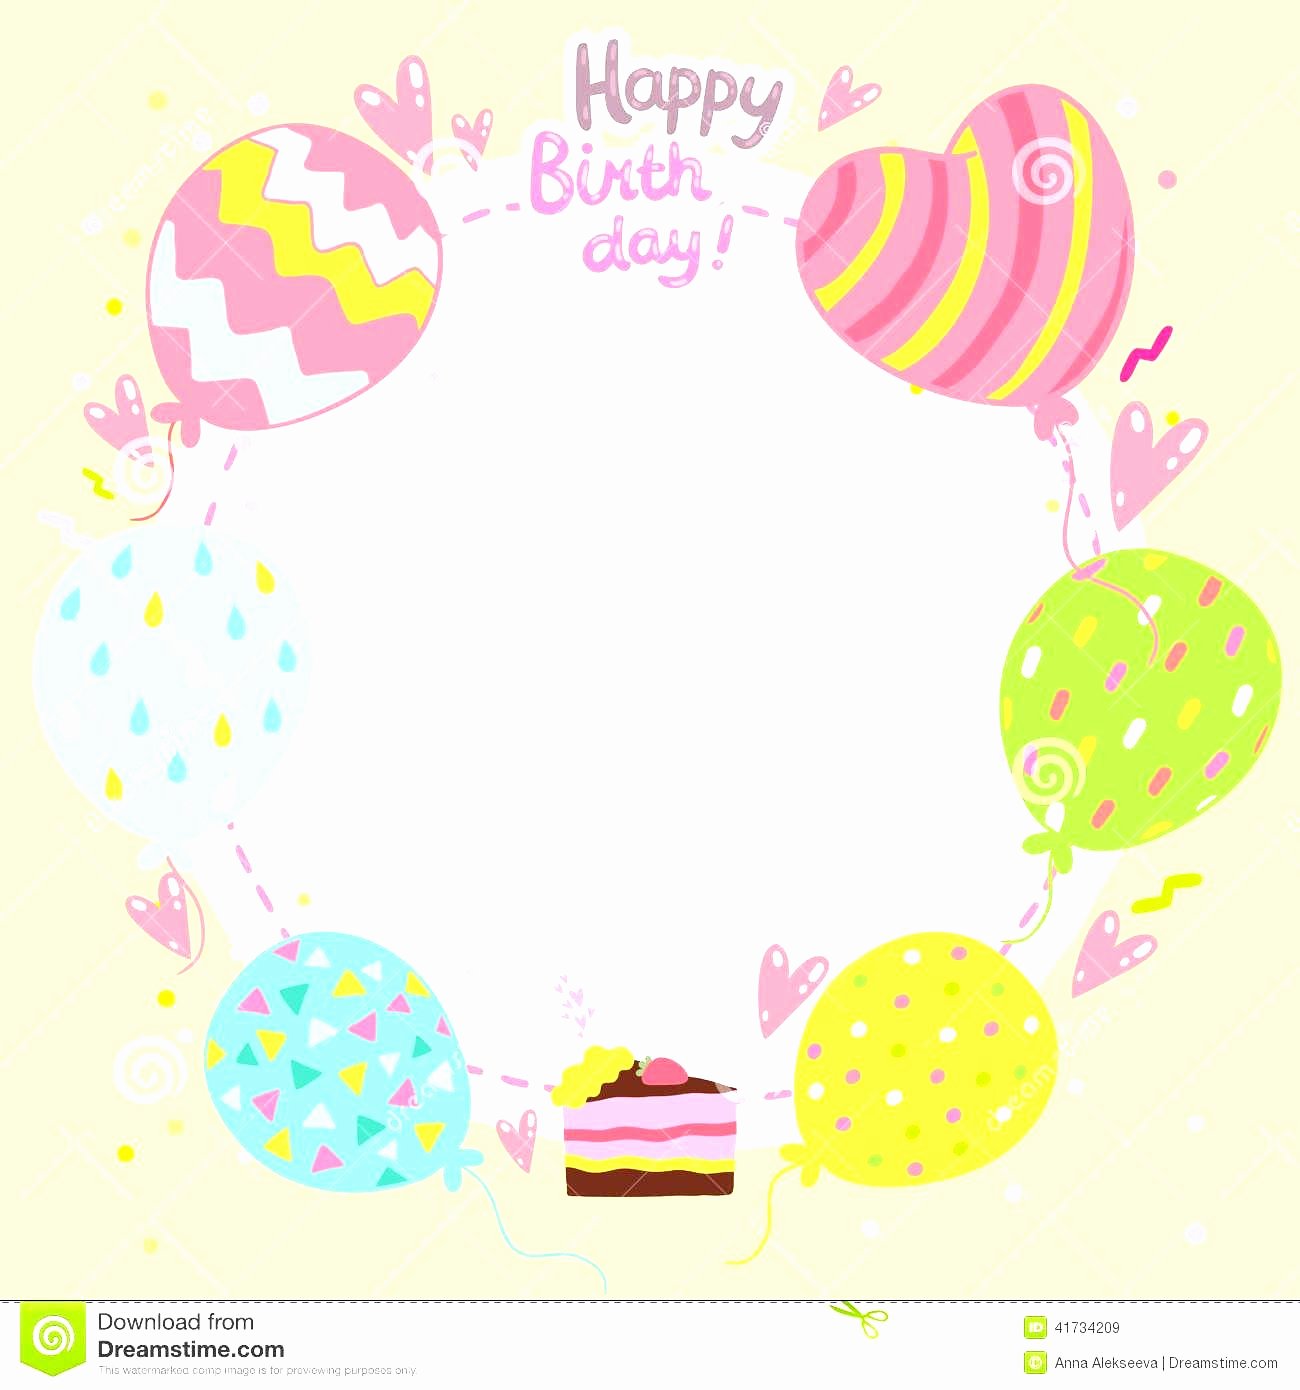 Happy Birthday Template Free Inspirational Birthday Card Template